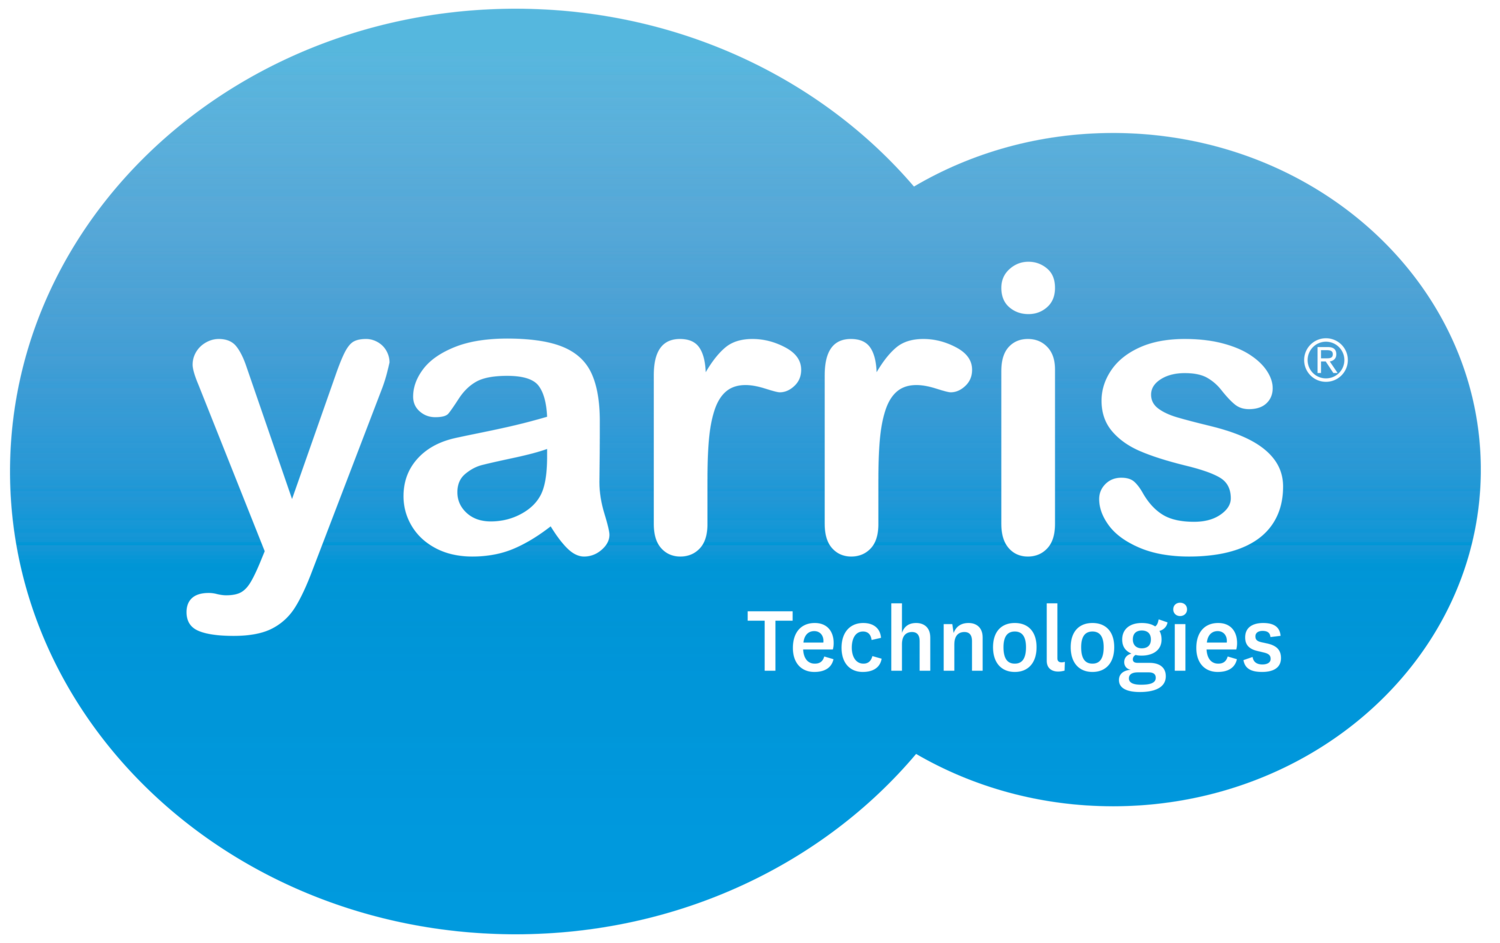 Yarris Technologies